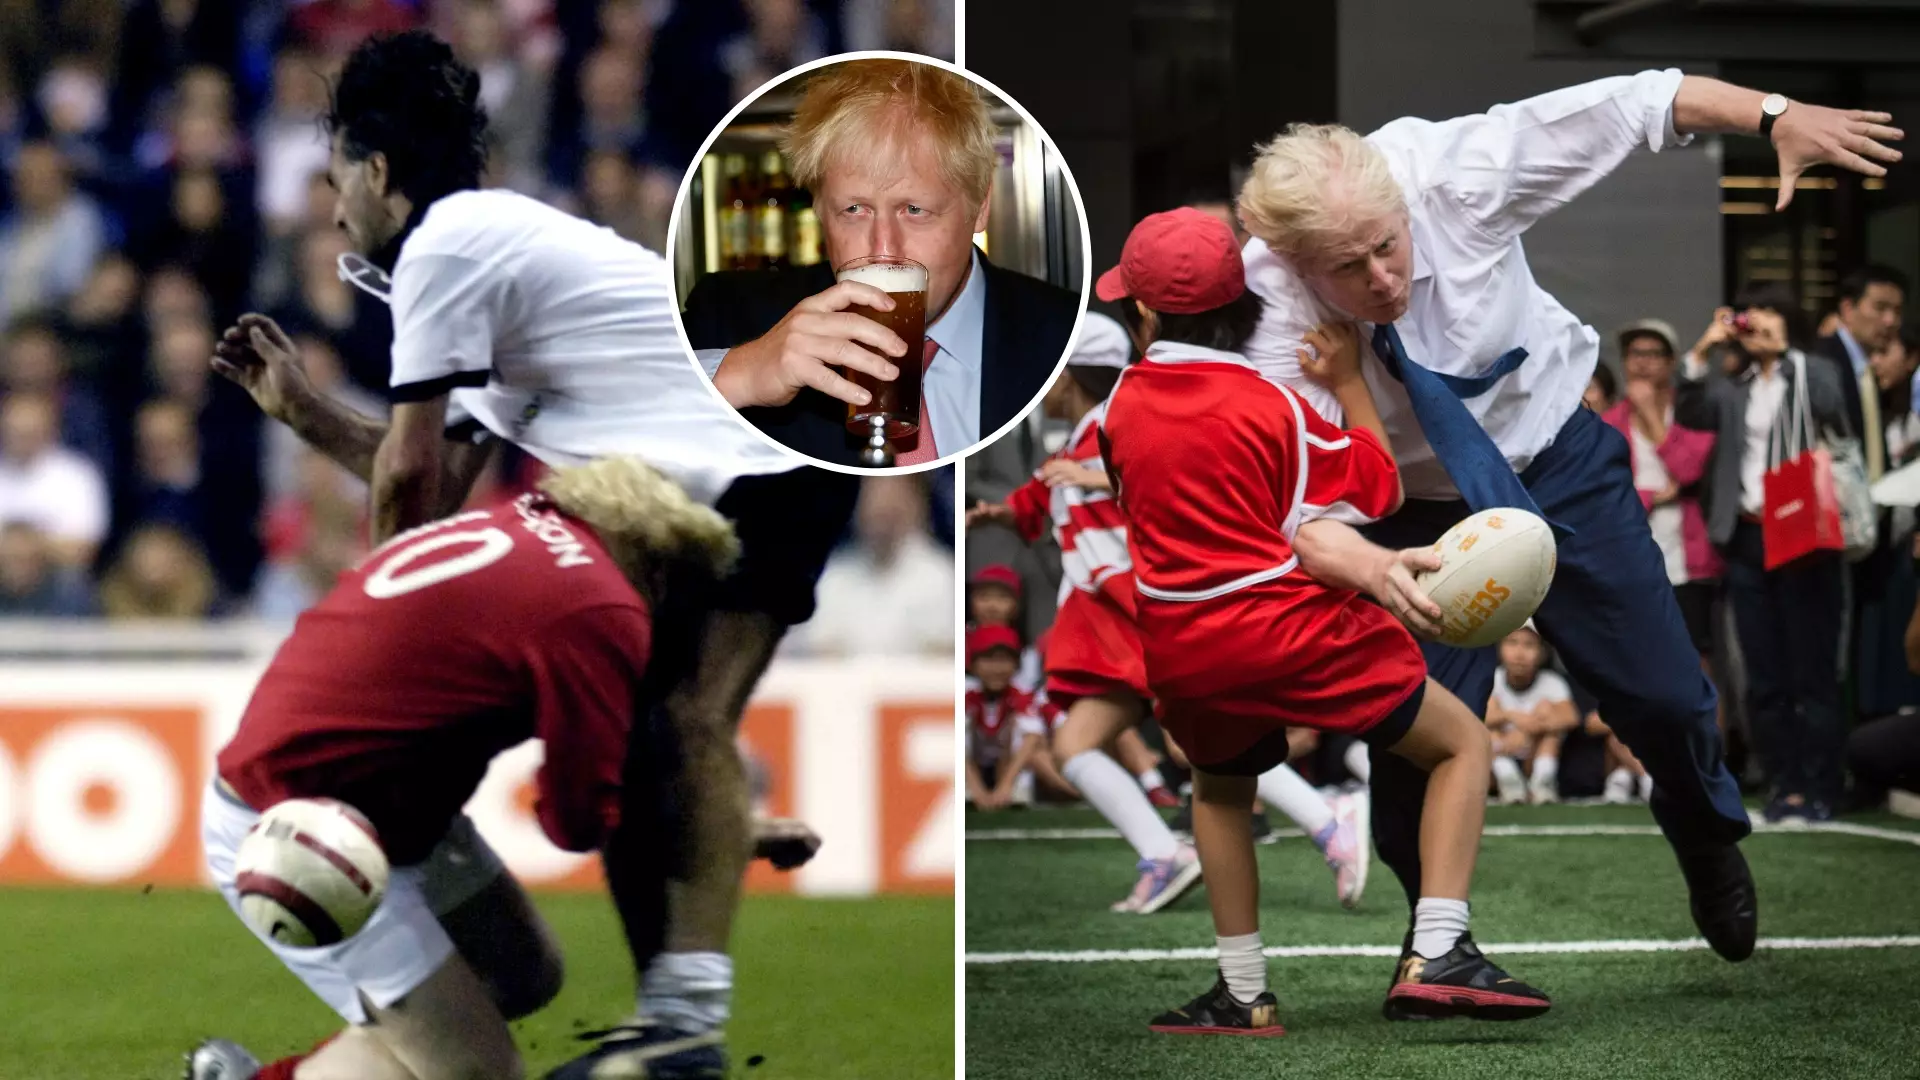 Next UK Prime Minister Boris Johnson Has Given Us Some Hilarious Sporting Memories